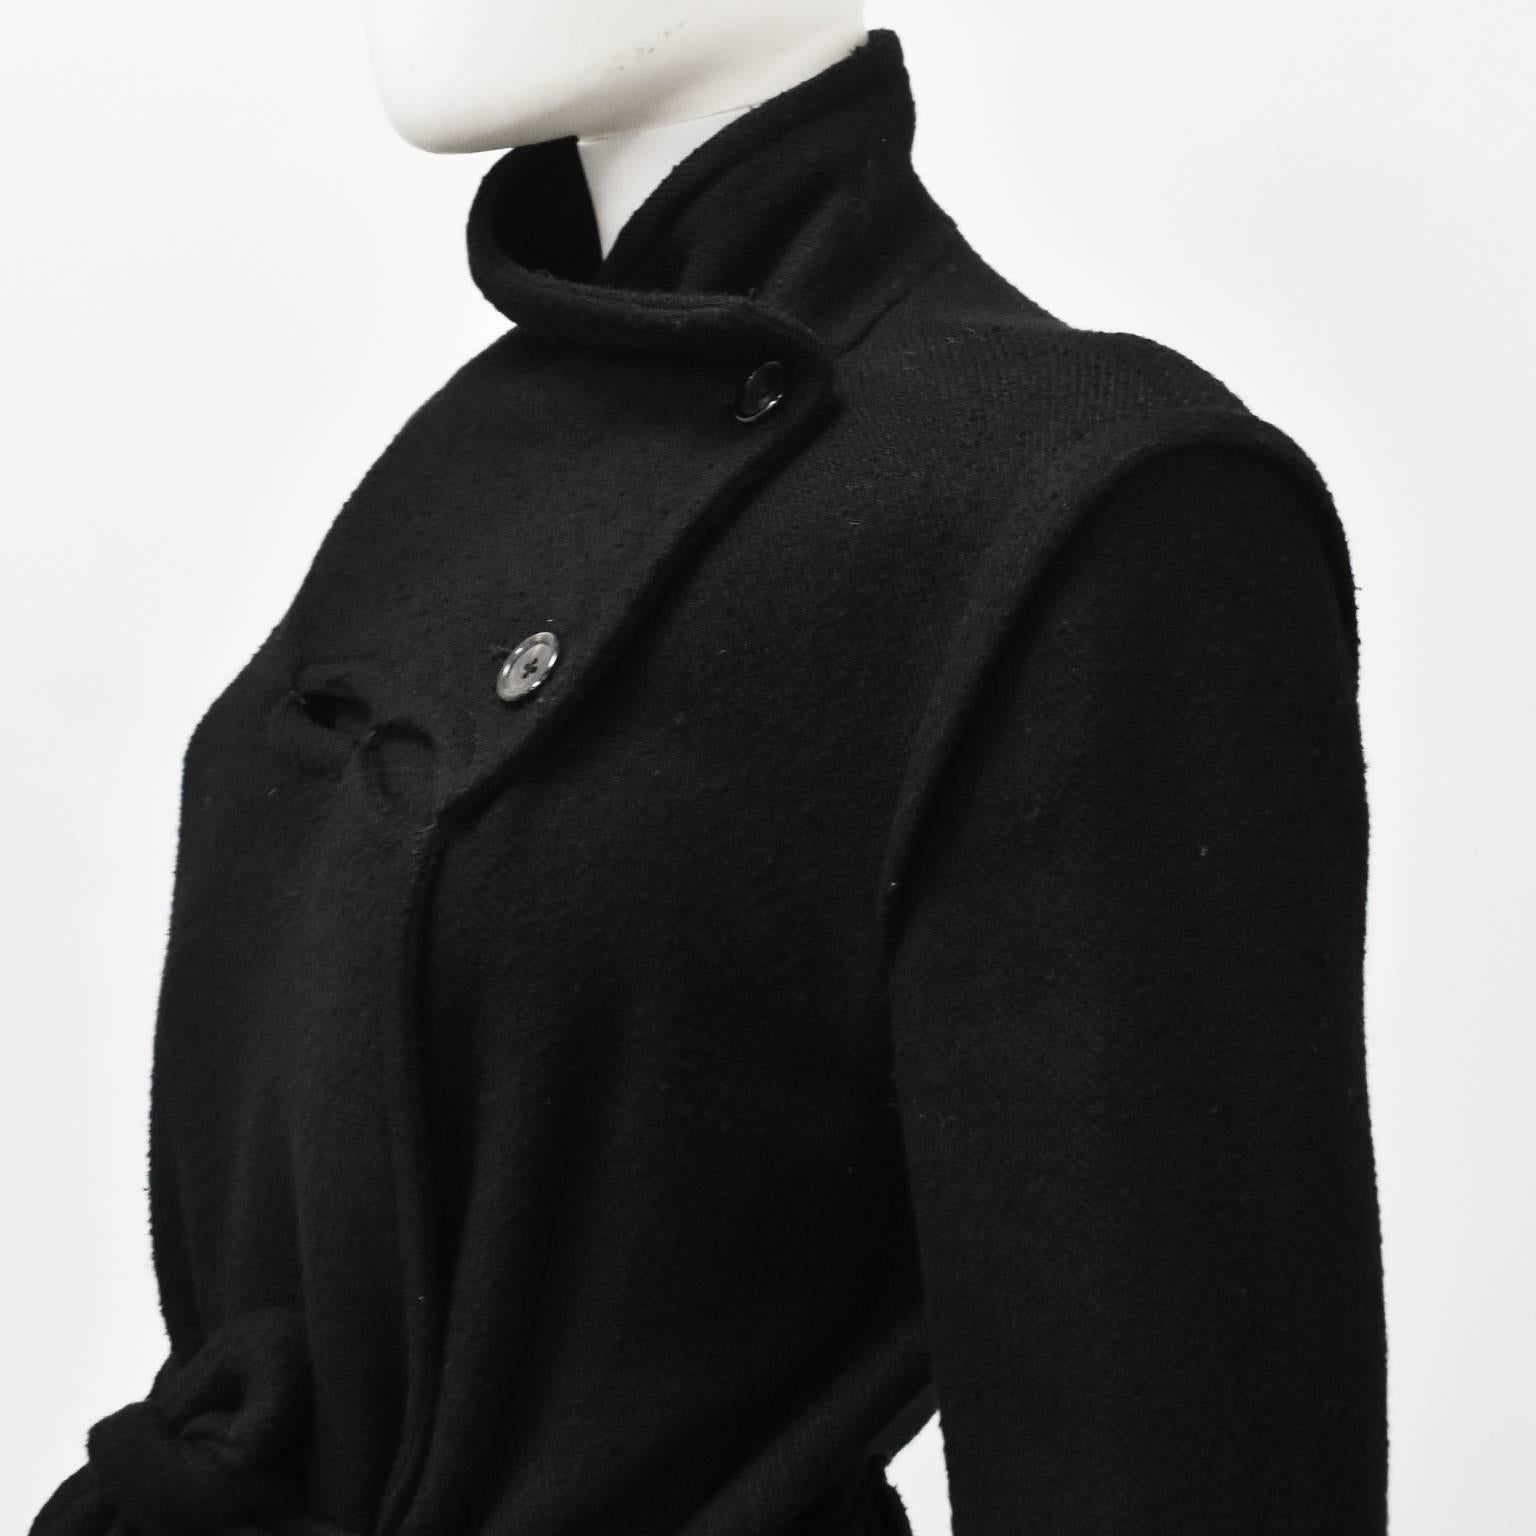 Ann Demeulemeester Black Asymmetric Coat with Collar Details and Tie Waist  1